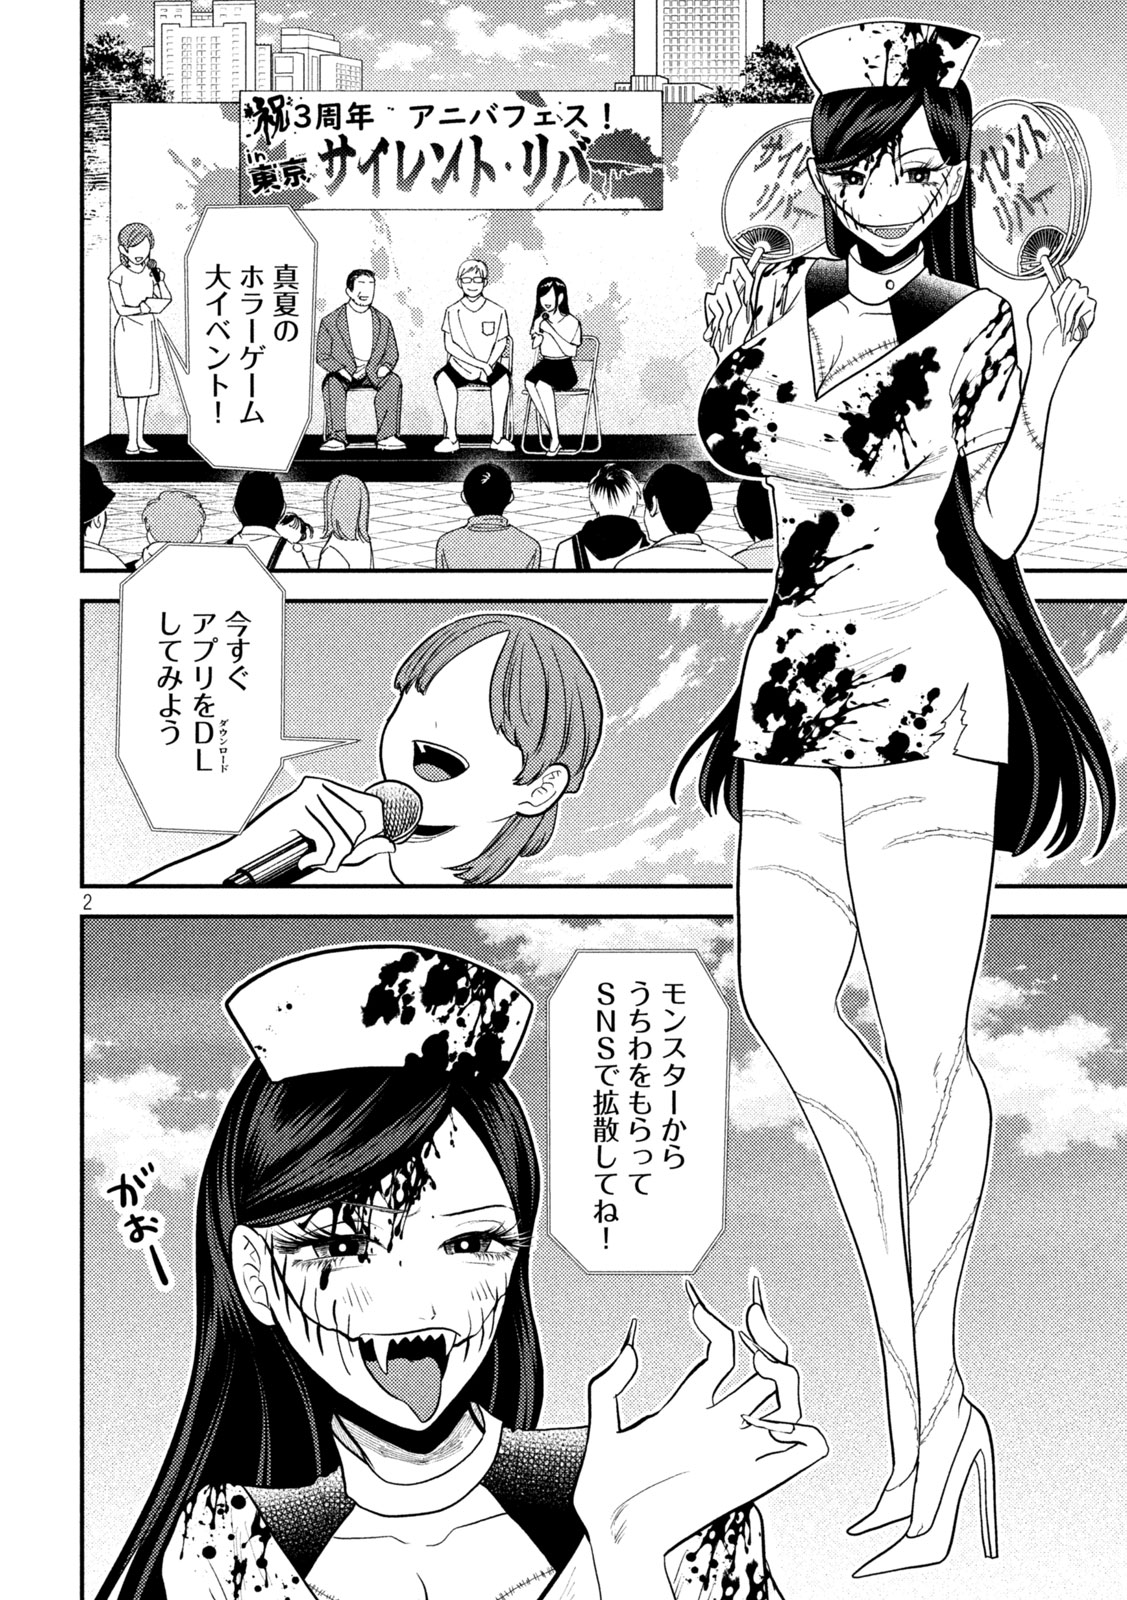 Heisei Haizanhei Sumire-chan - Chapter 22 - Page 2